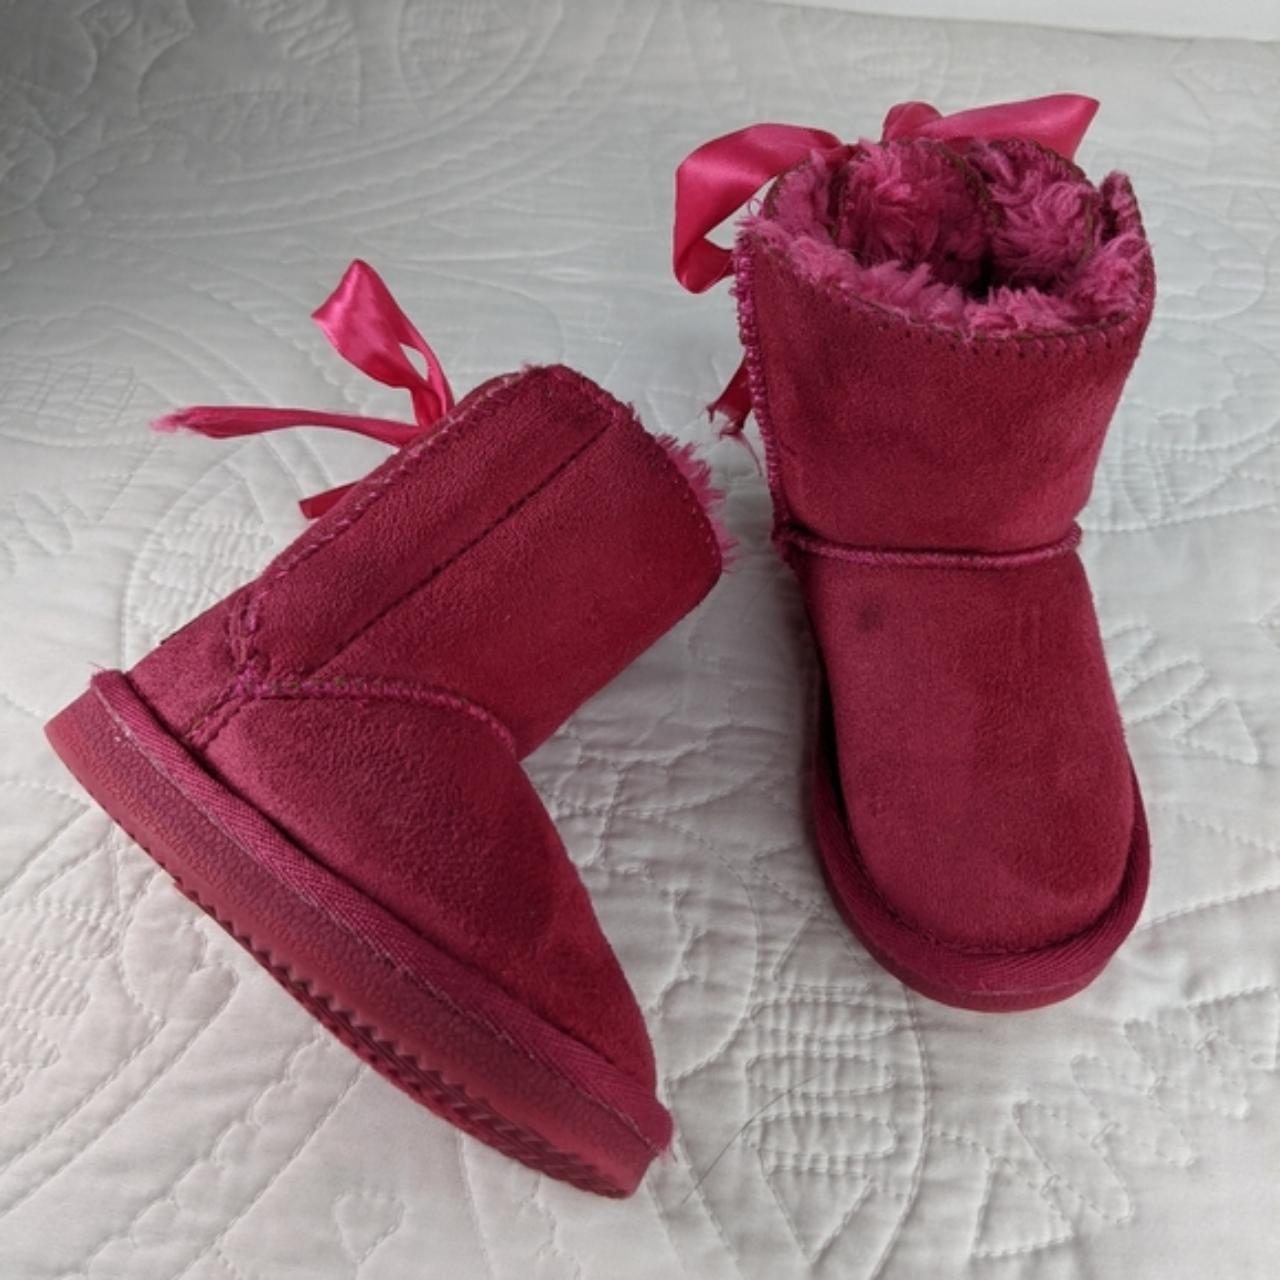 Lamo Pink Boots